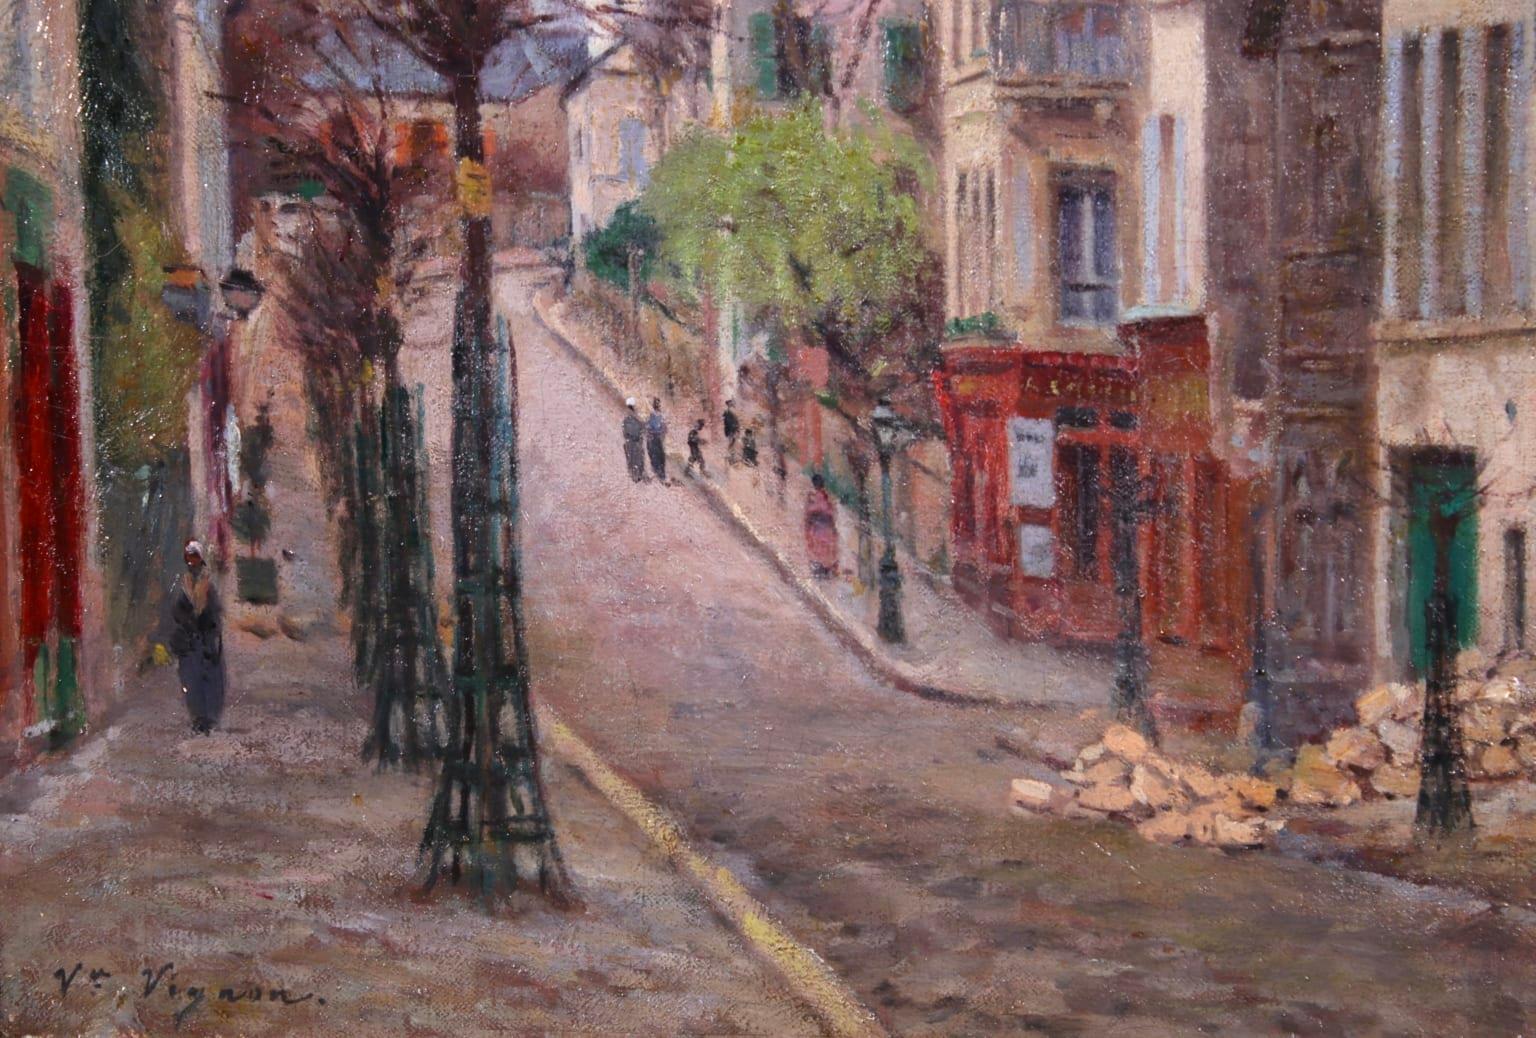 Montmartre - Impressionist Oil, Figures in Street Landscape by Victor Vignon 2